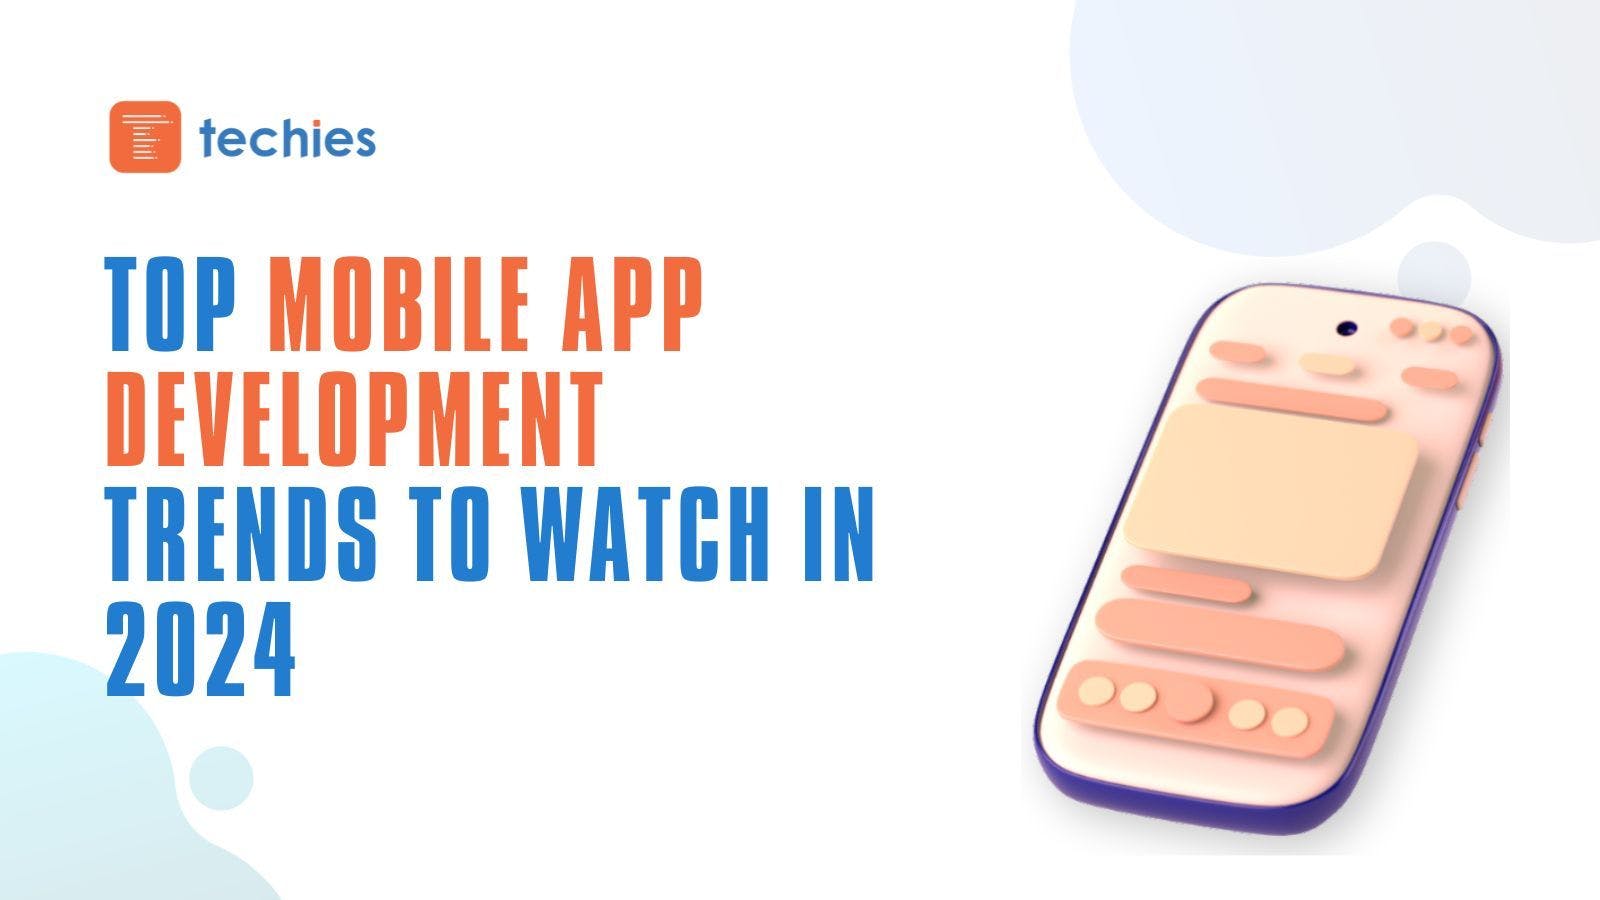 Top Mobile App Development Trends to Watch in 2024